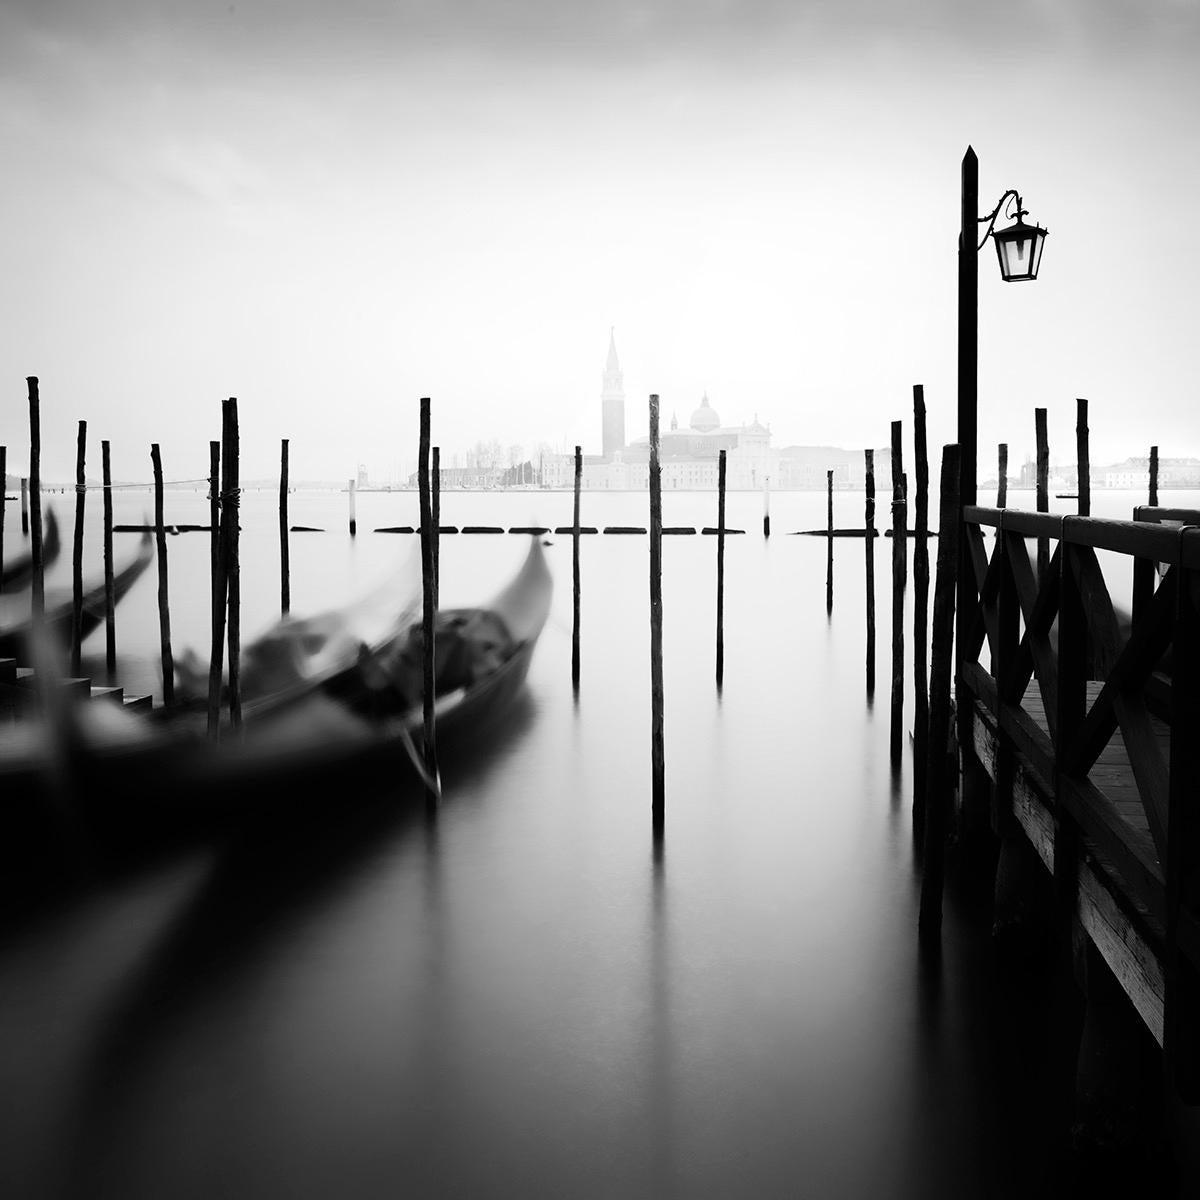 Venice. Limited edition landscape photograph by Alexandre Manuel. 